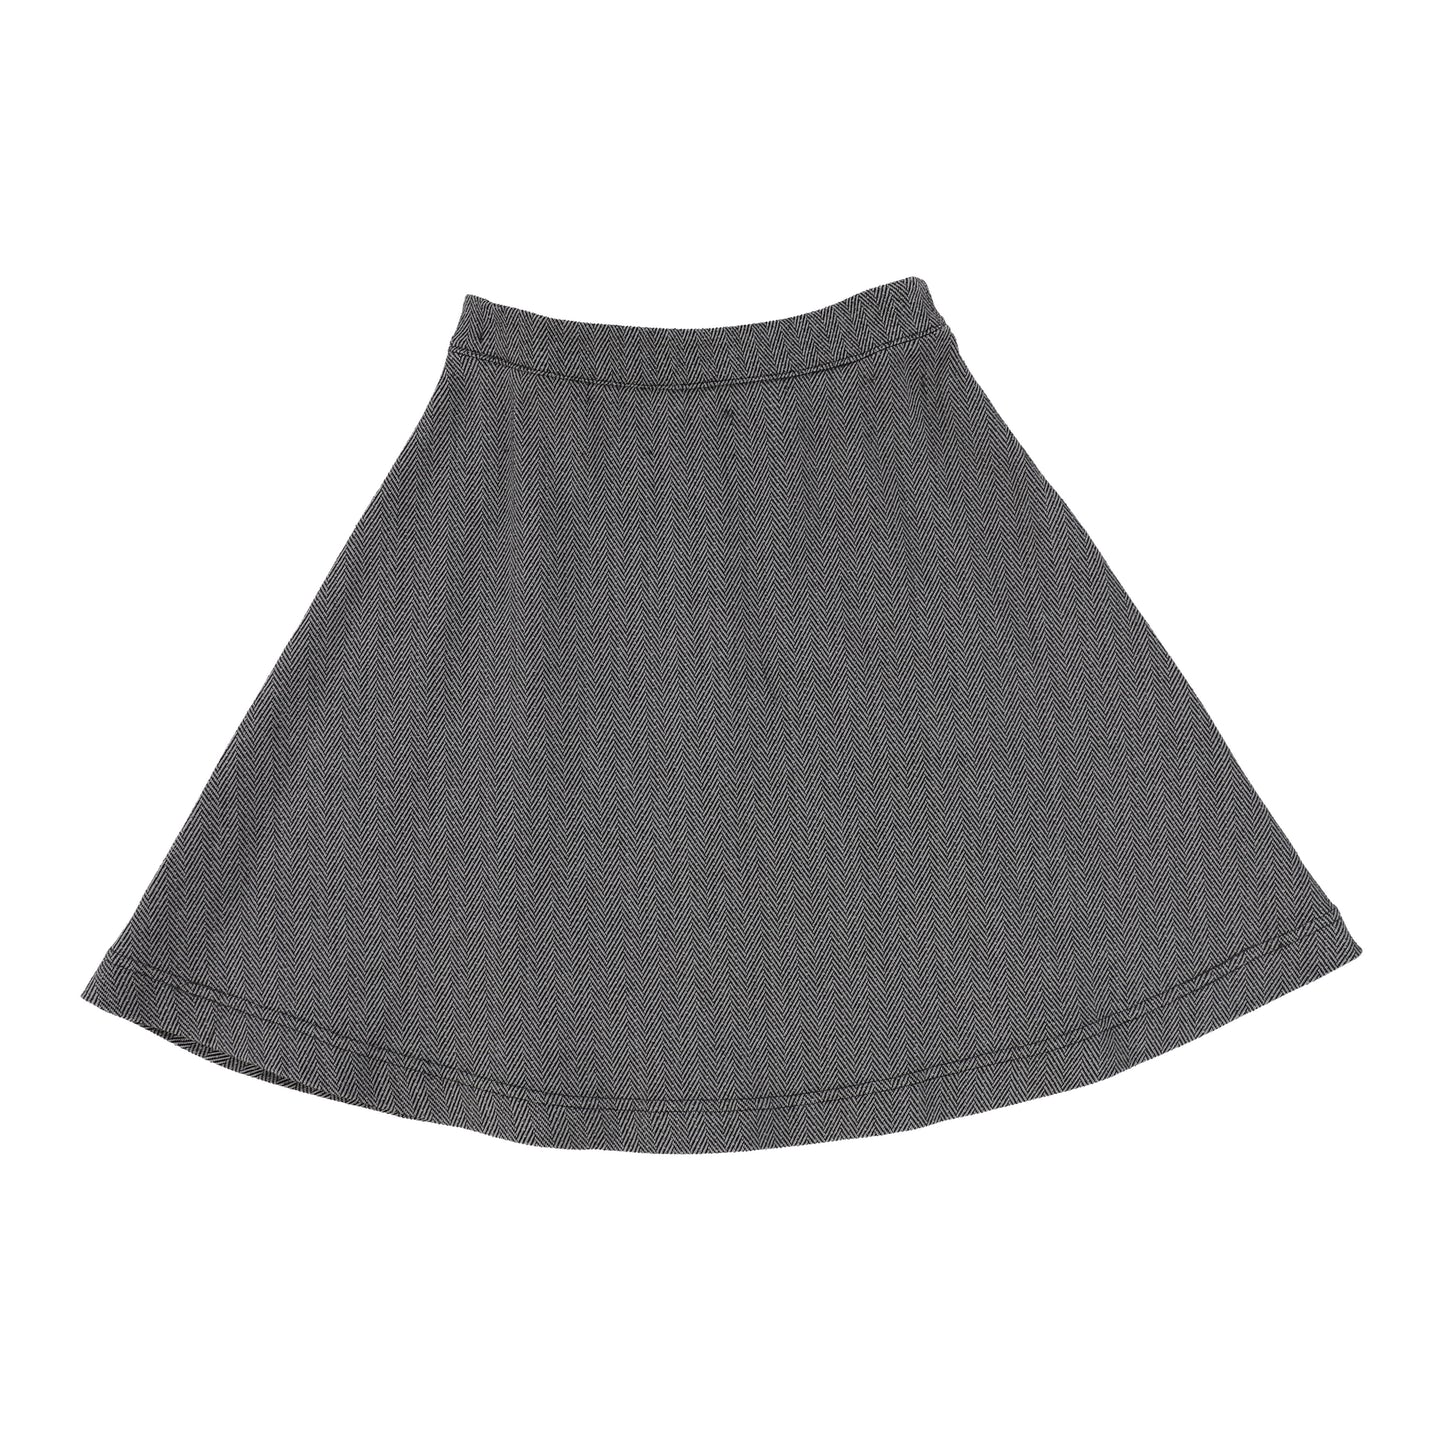 Analogie Black Herringbone Pleated Skirt [Final Sale]